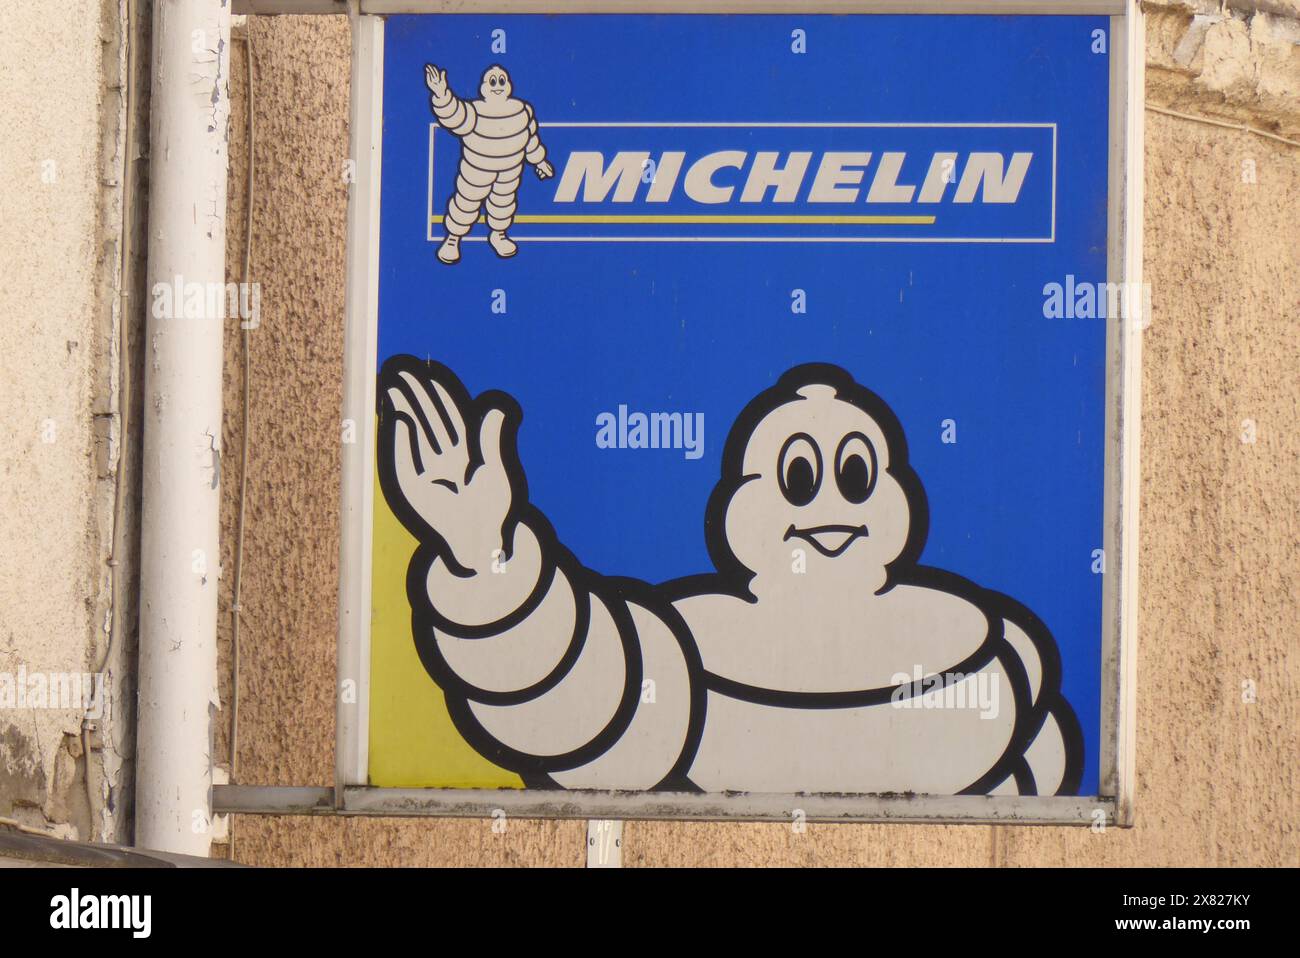 Michelin Bibendum man advertising sign on wall in France Stock Photo